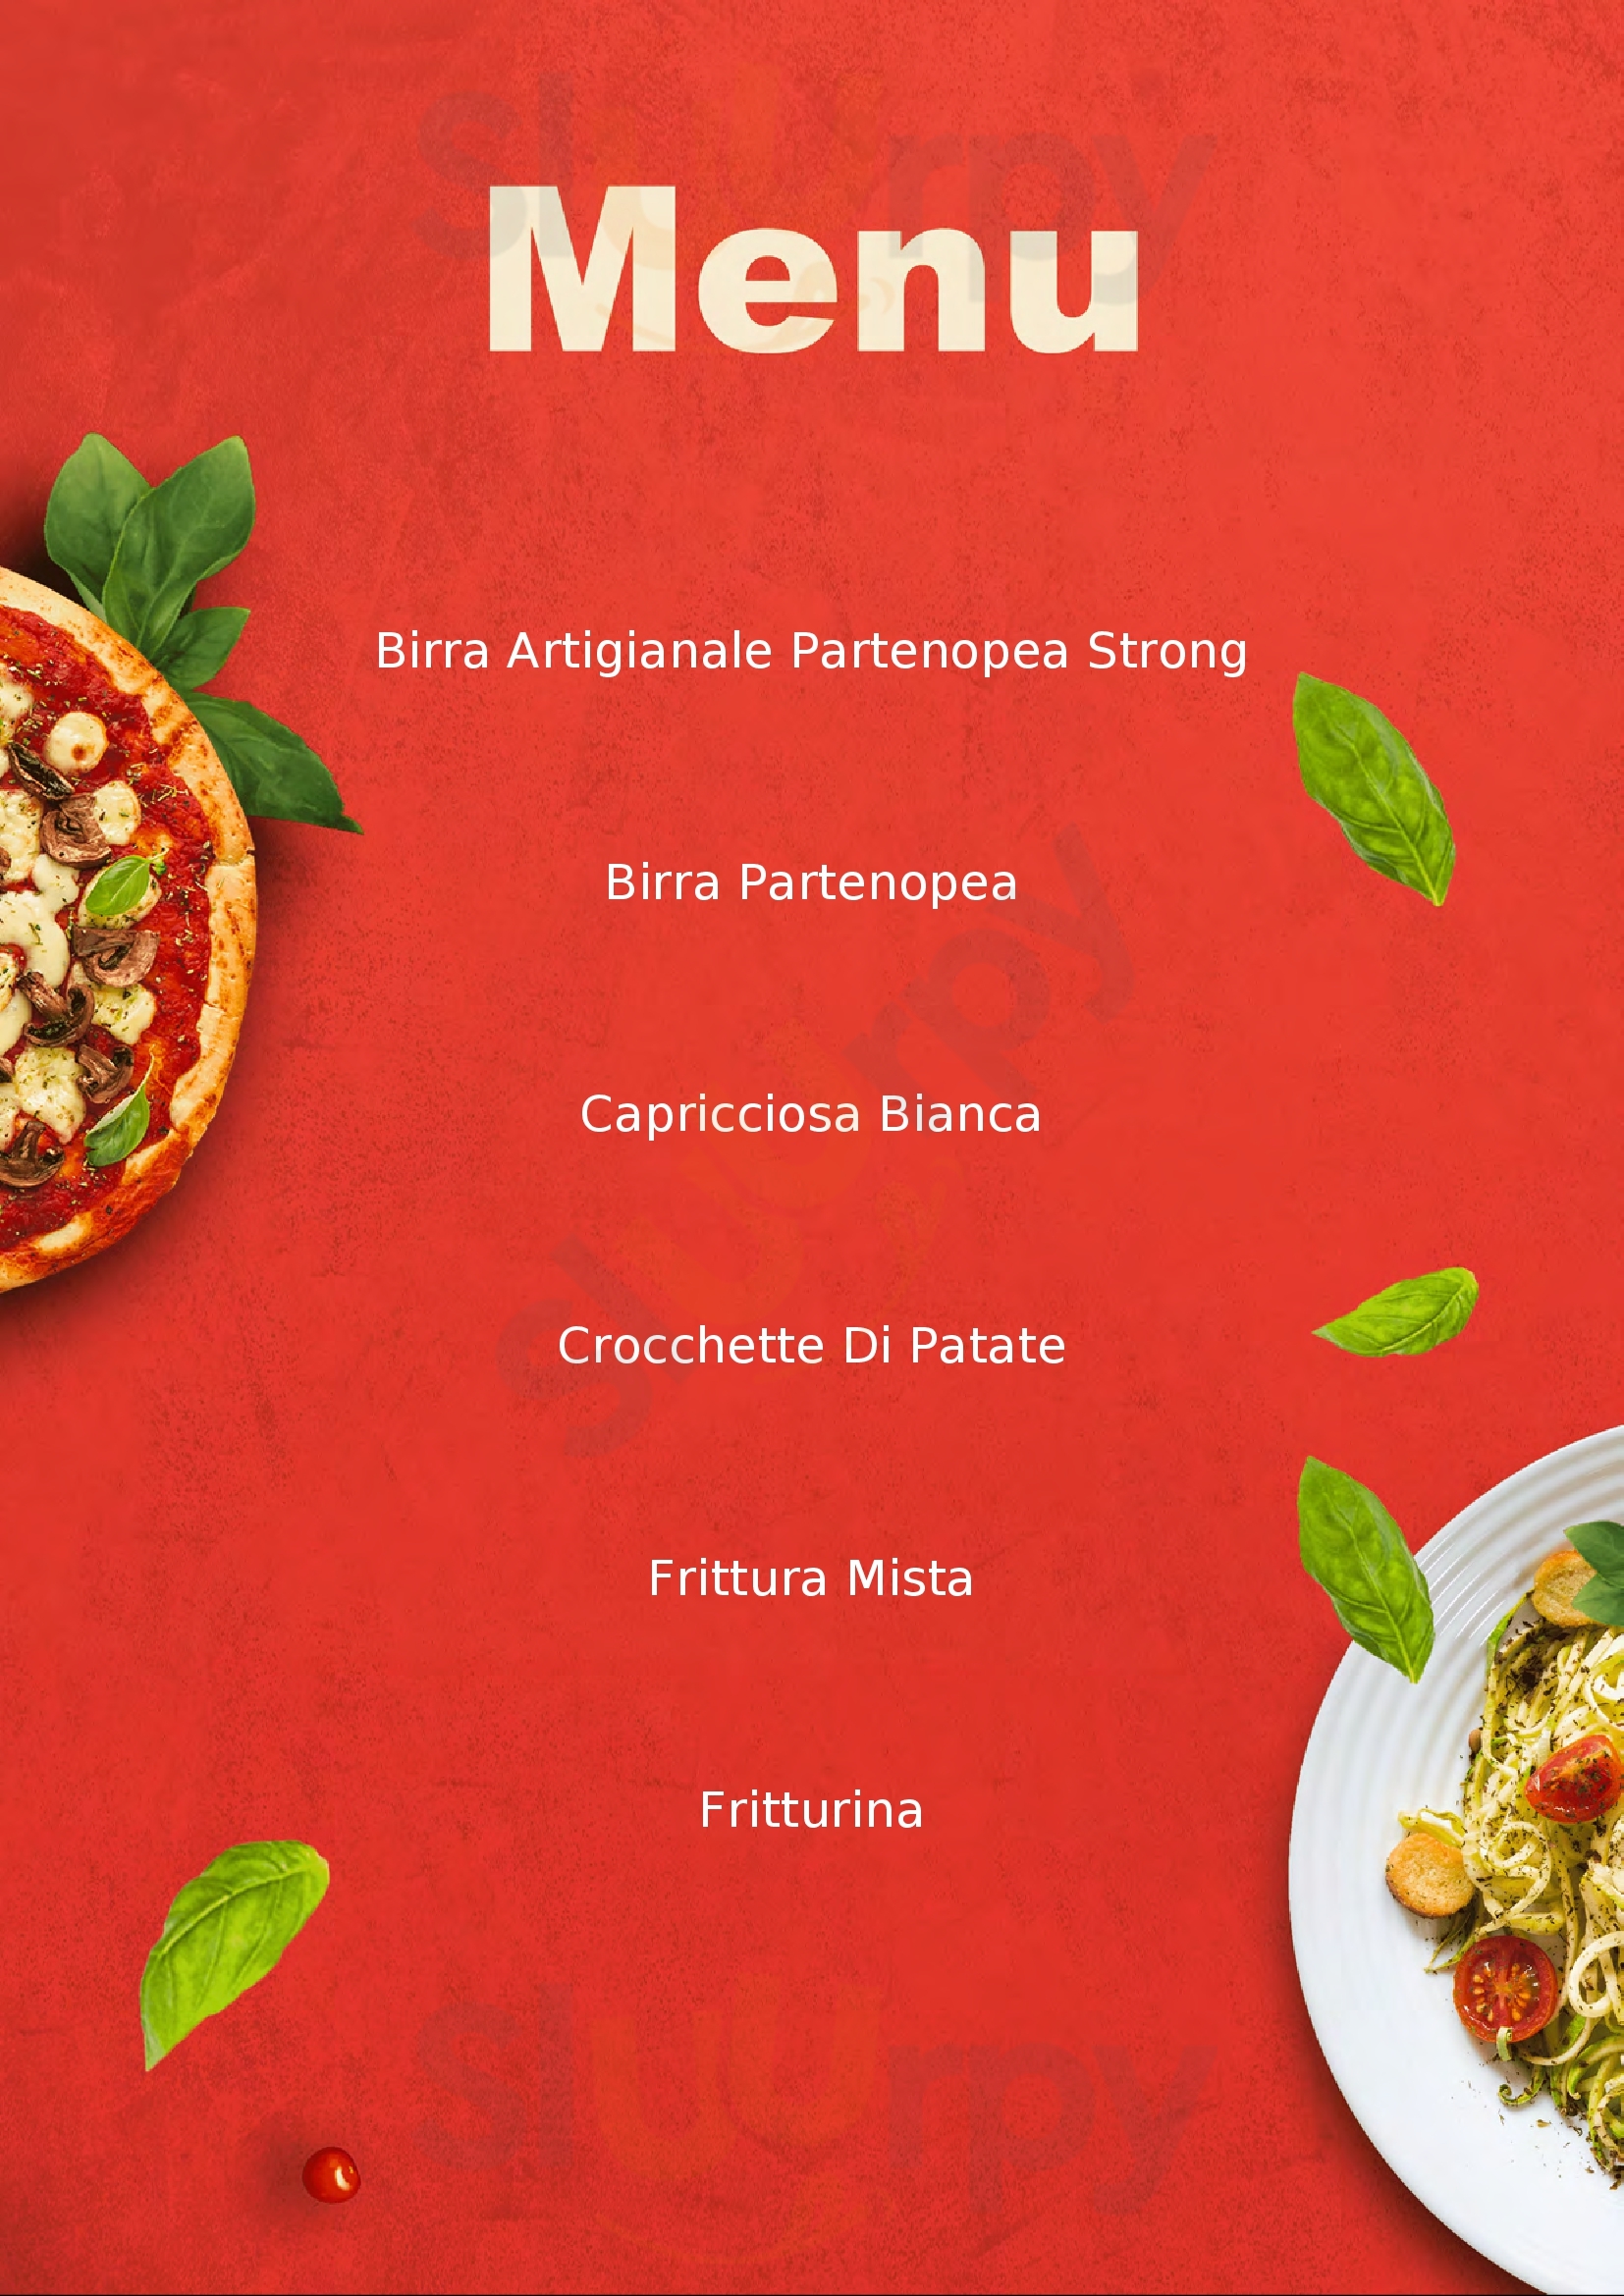 Pizzeria Emanuele Cimetta Pomigliano d'Arco menù 1 pagina